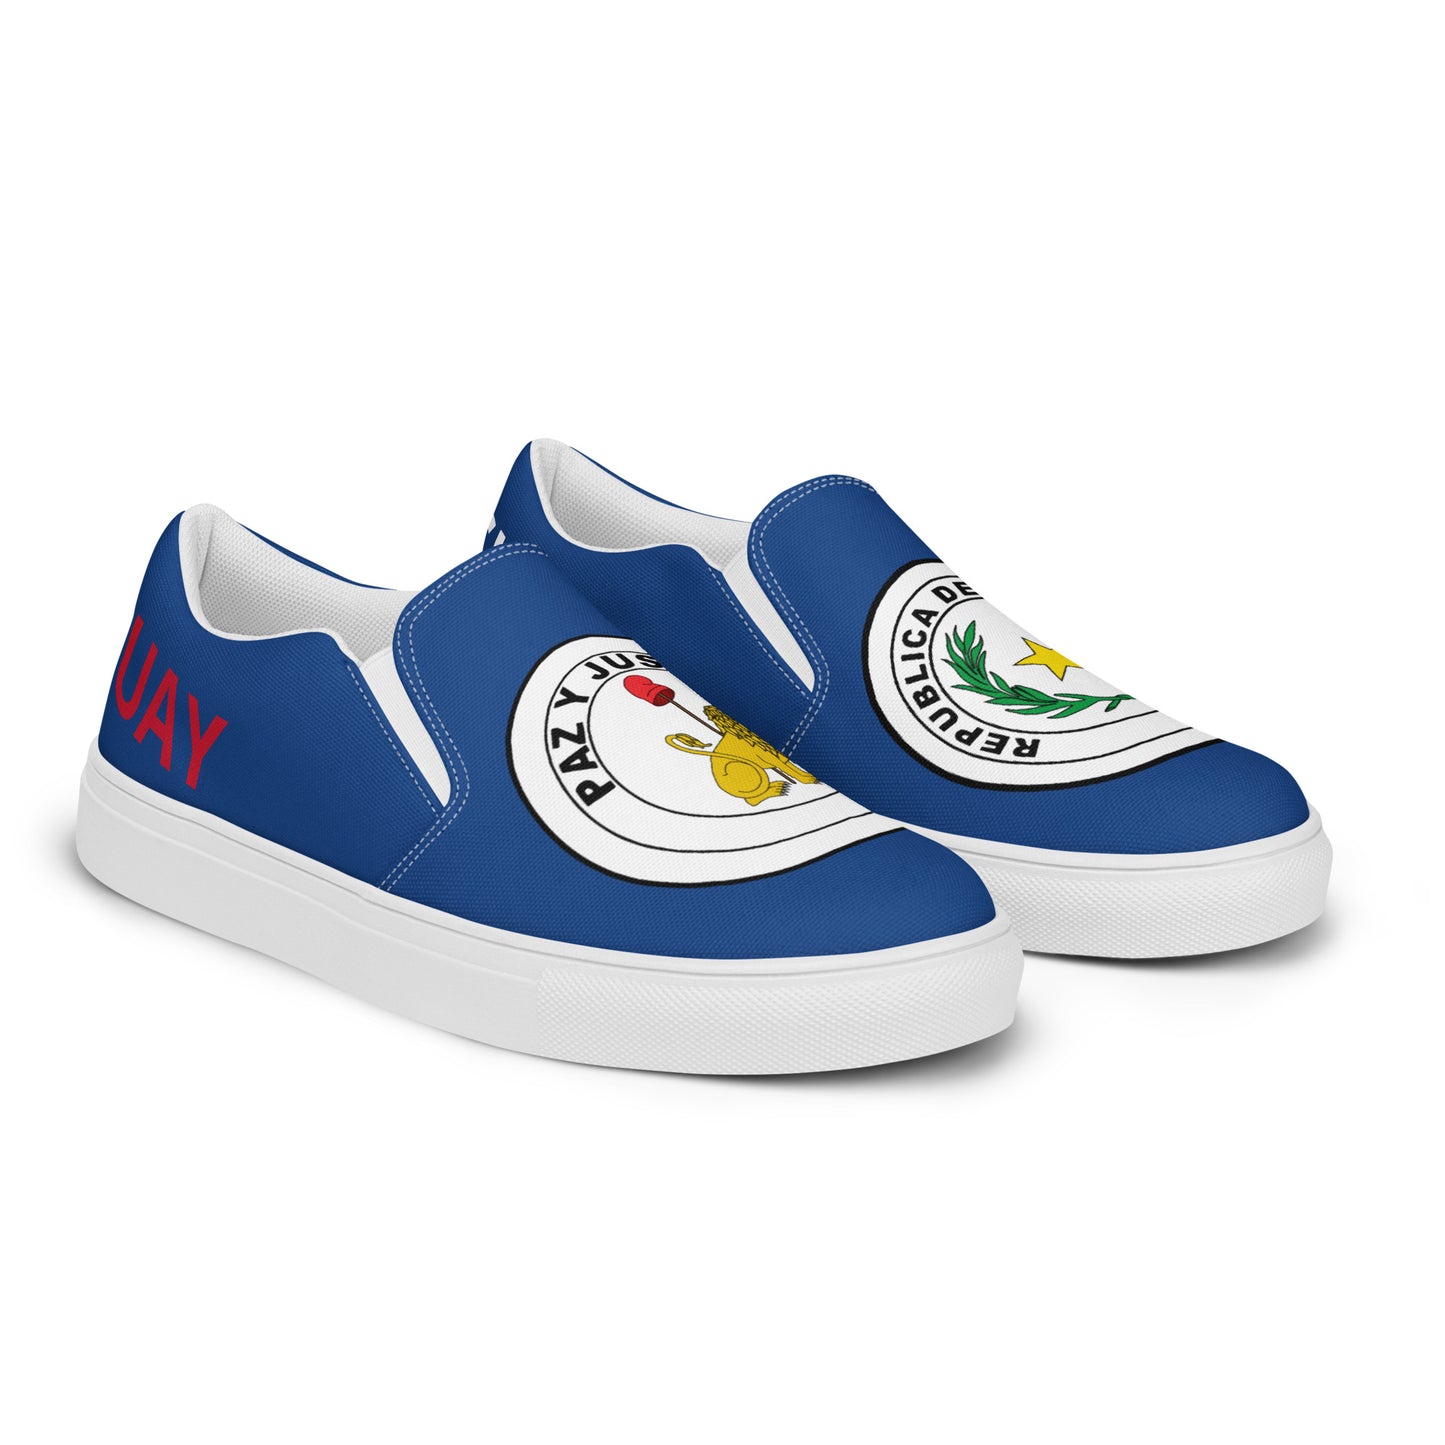 Paraguay - Men - Blue - Slip-on shoes